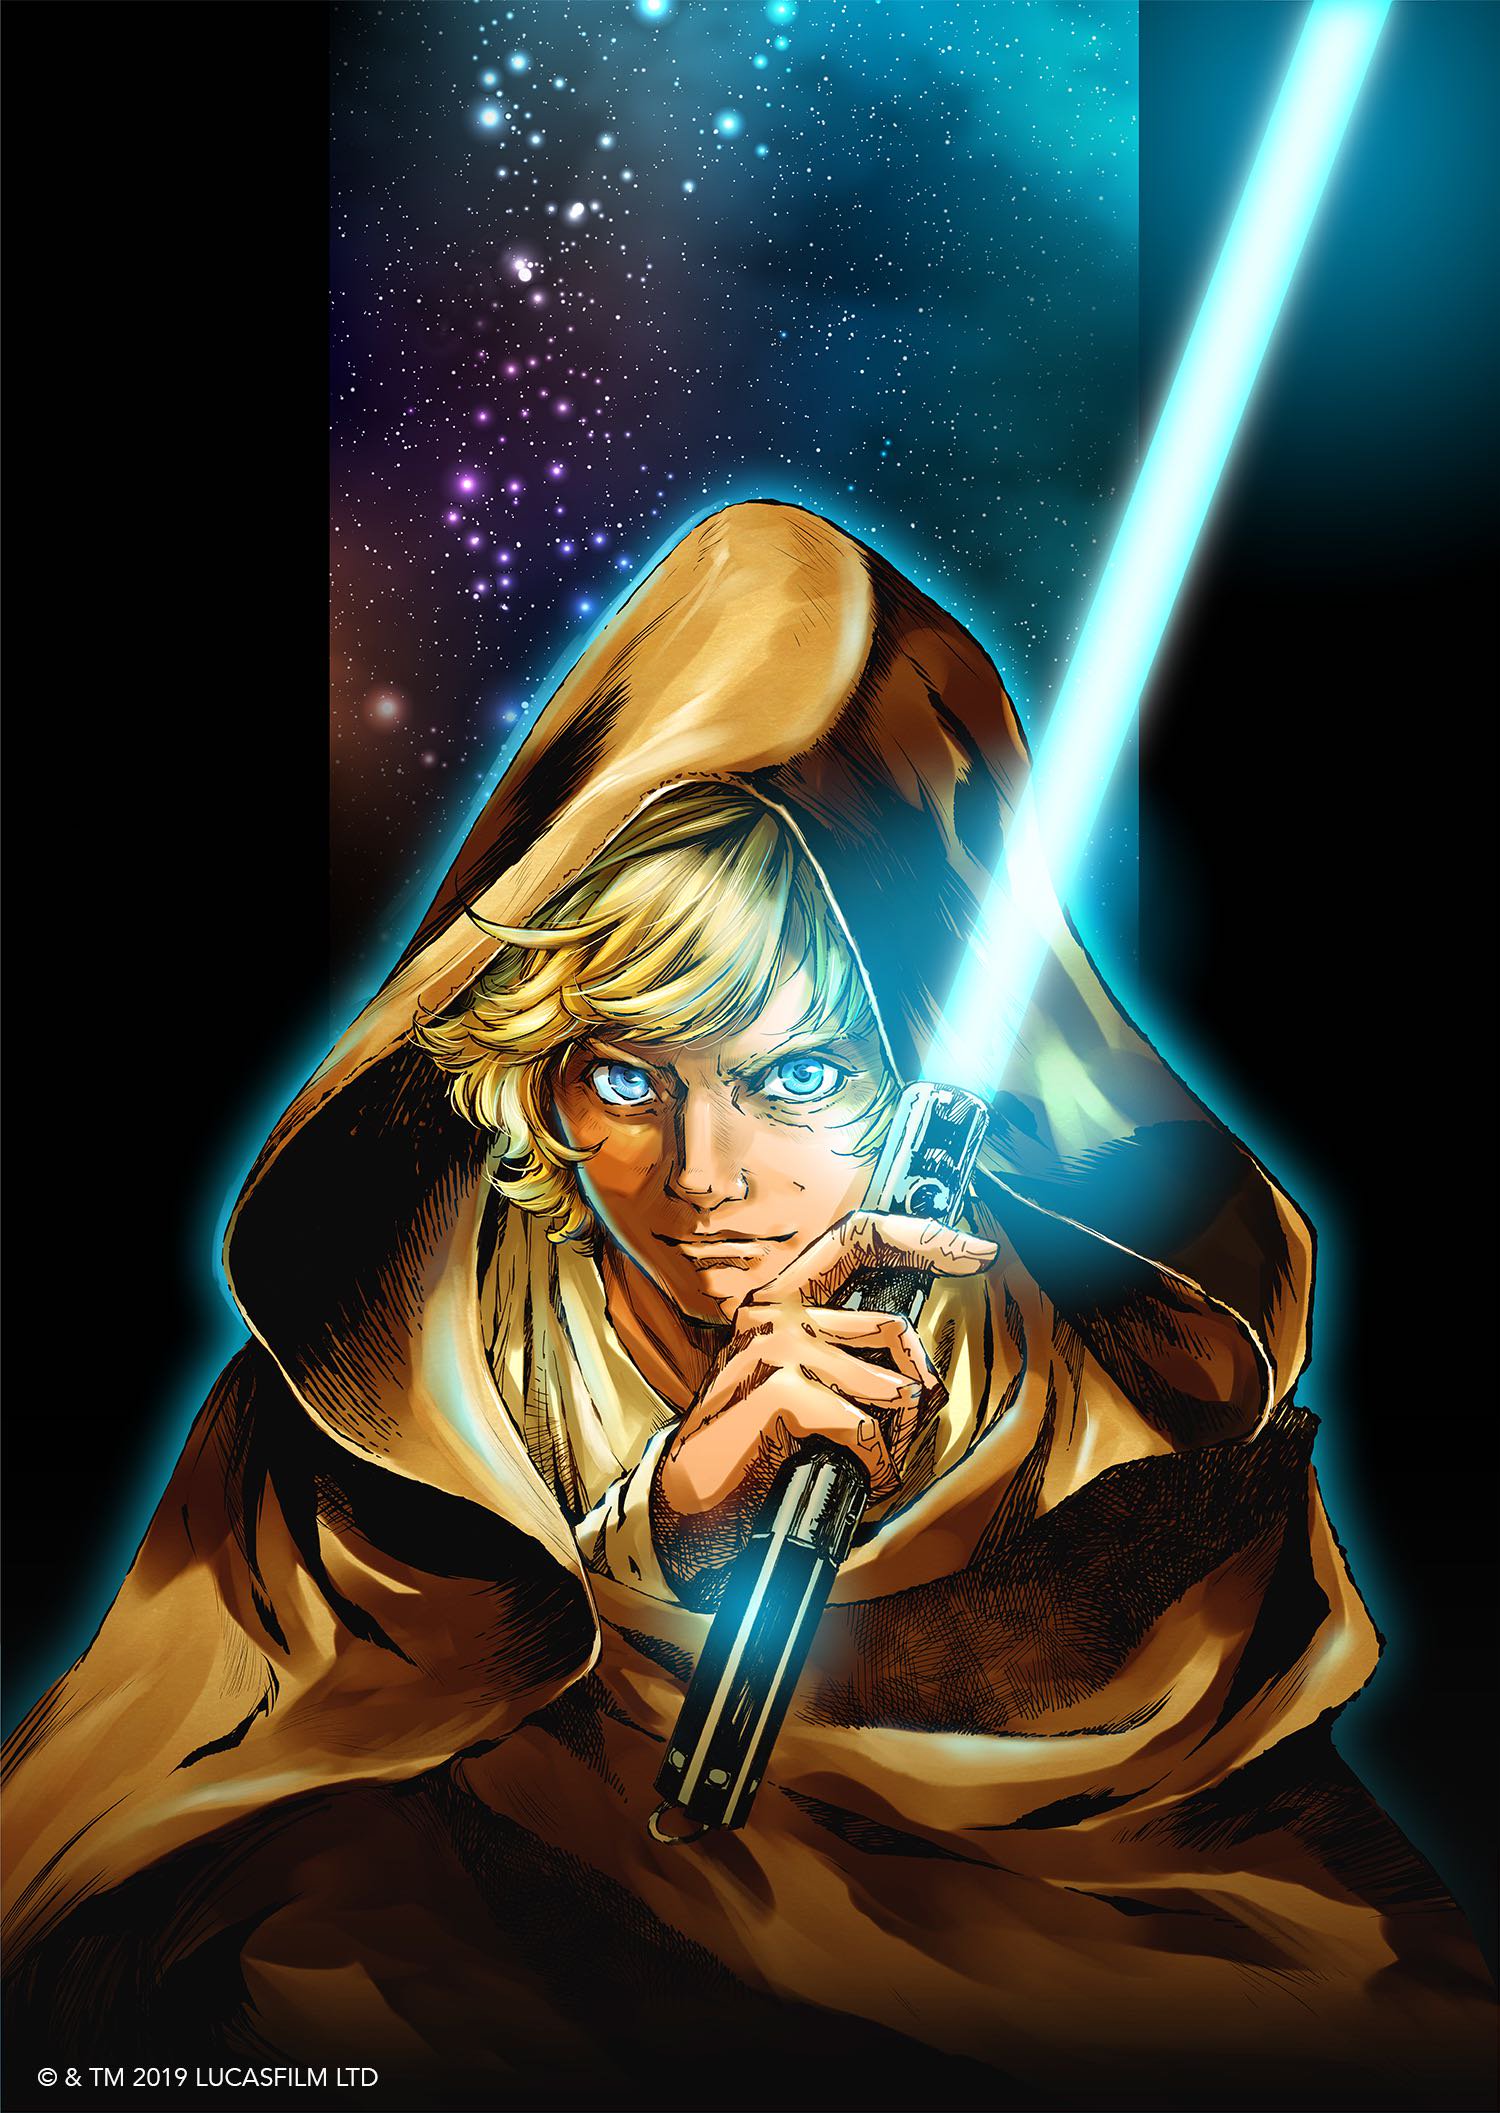 Miniatura Plik:The Legends of Luke Skywalker coverart.jpg